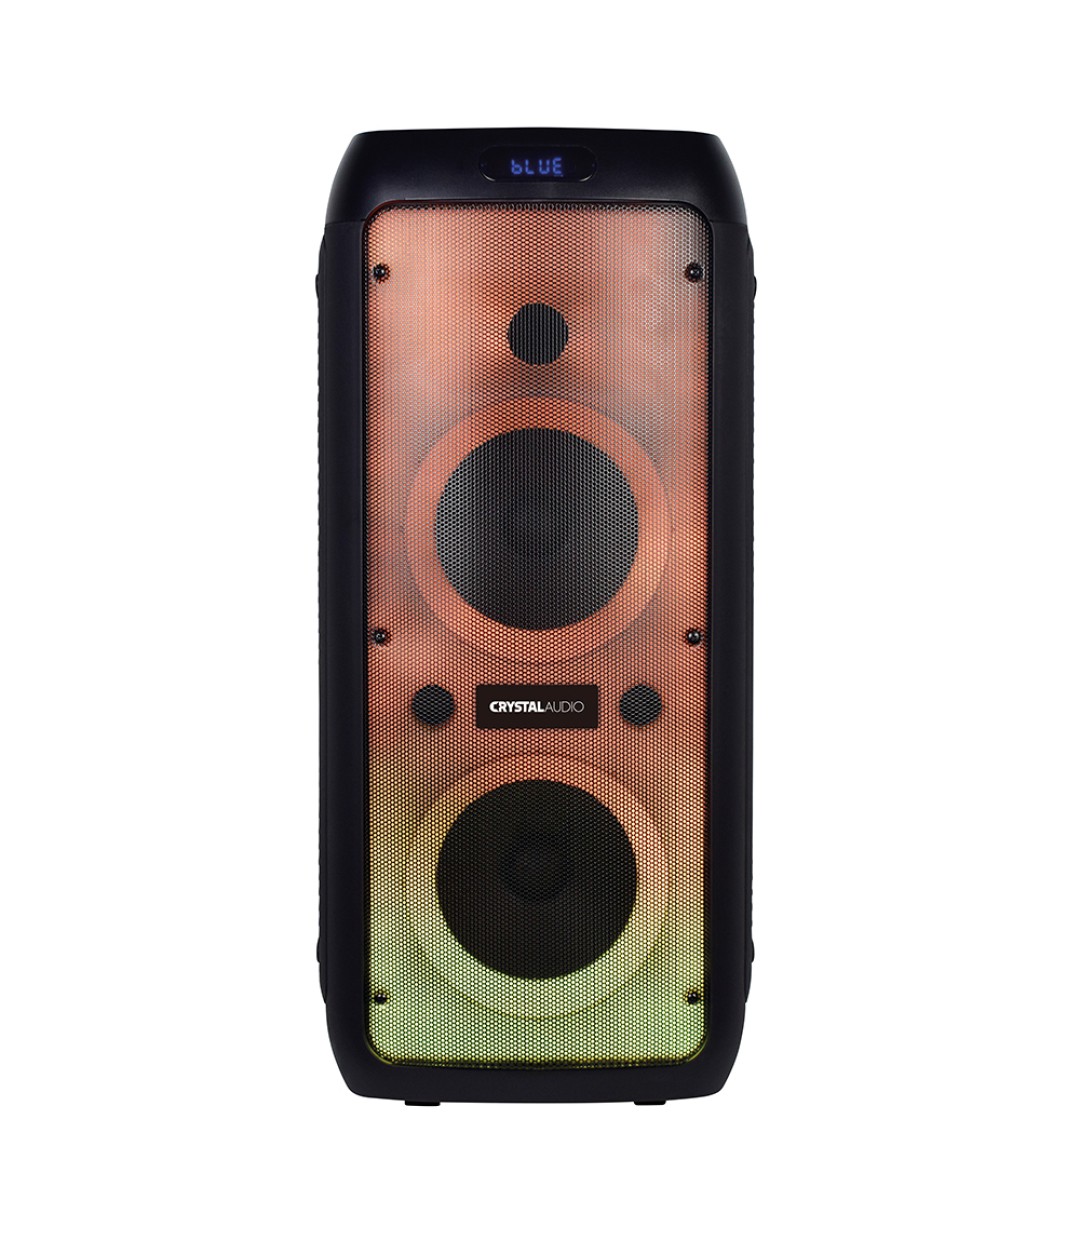 Crystal Audio Σύστημα Karaoke με Ασύρματo Μικρόφωνo PRT-16 σε Μαύρο Χρώμα